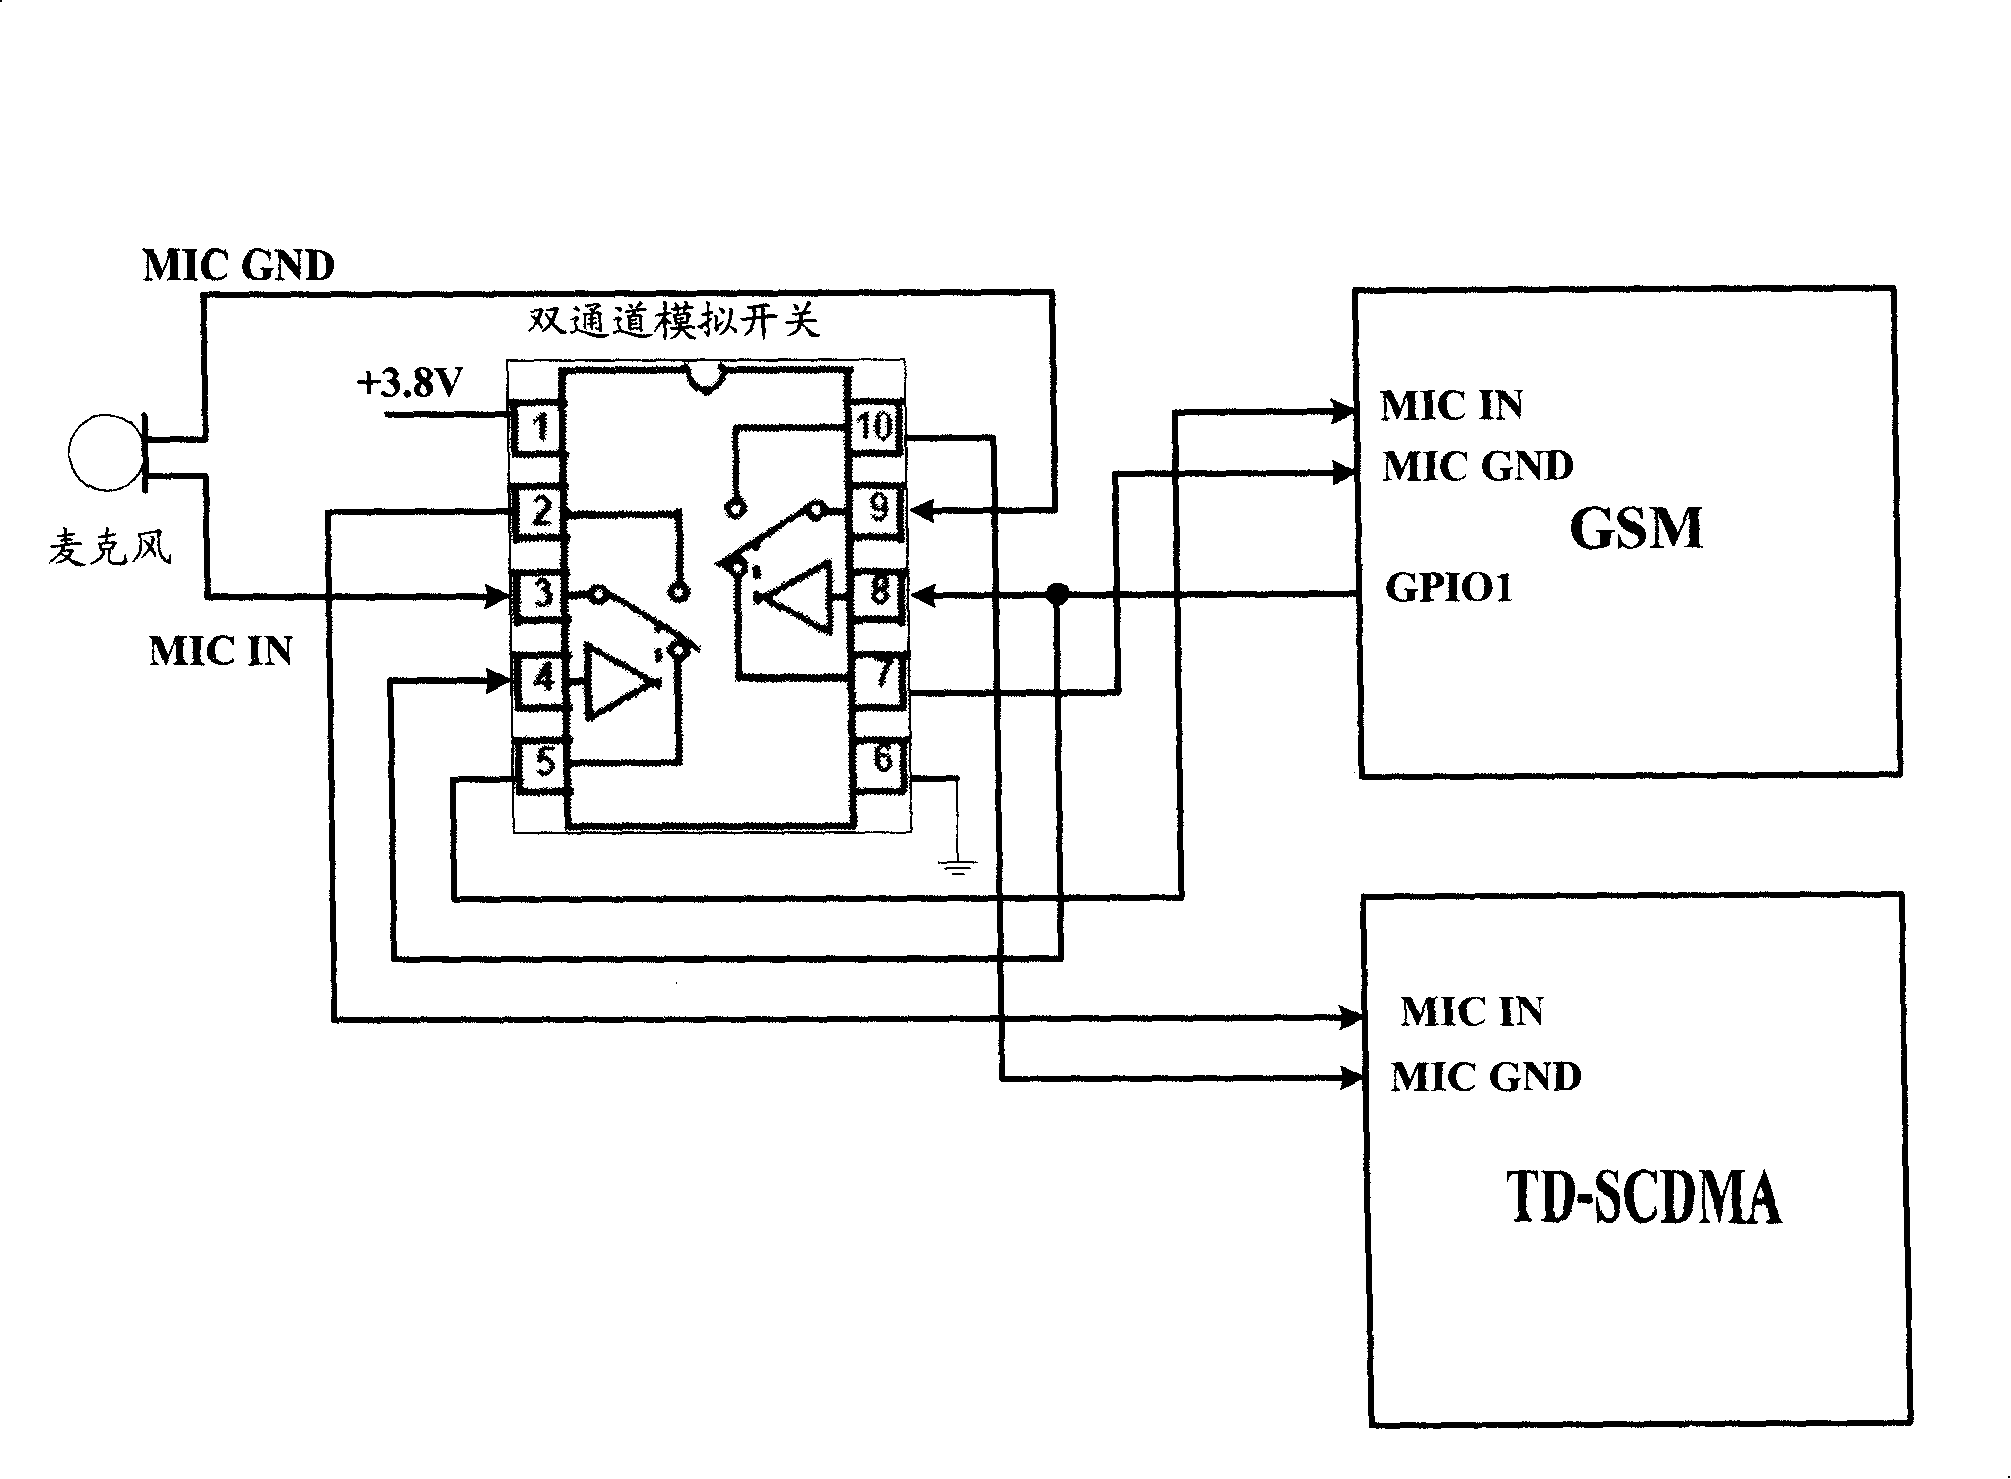 Audio control circuit for TD-SCDMA/GSM dual-mode mobile phone